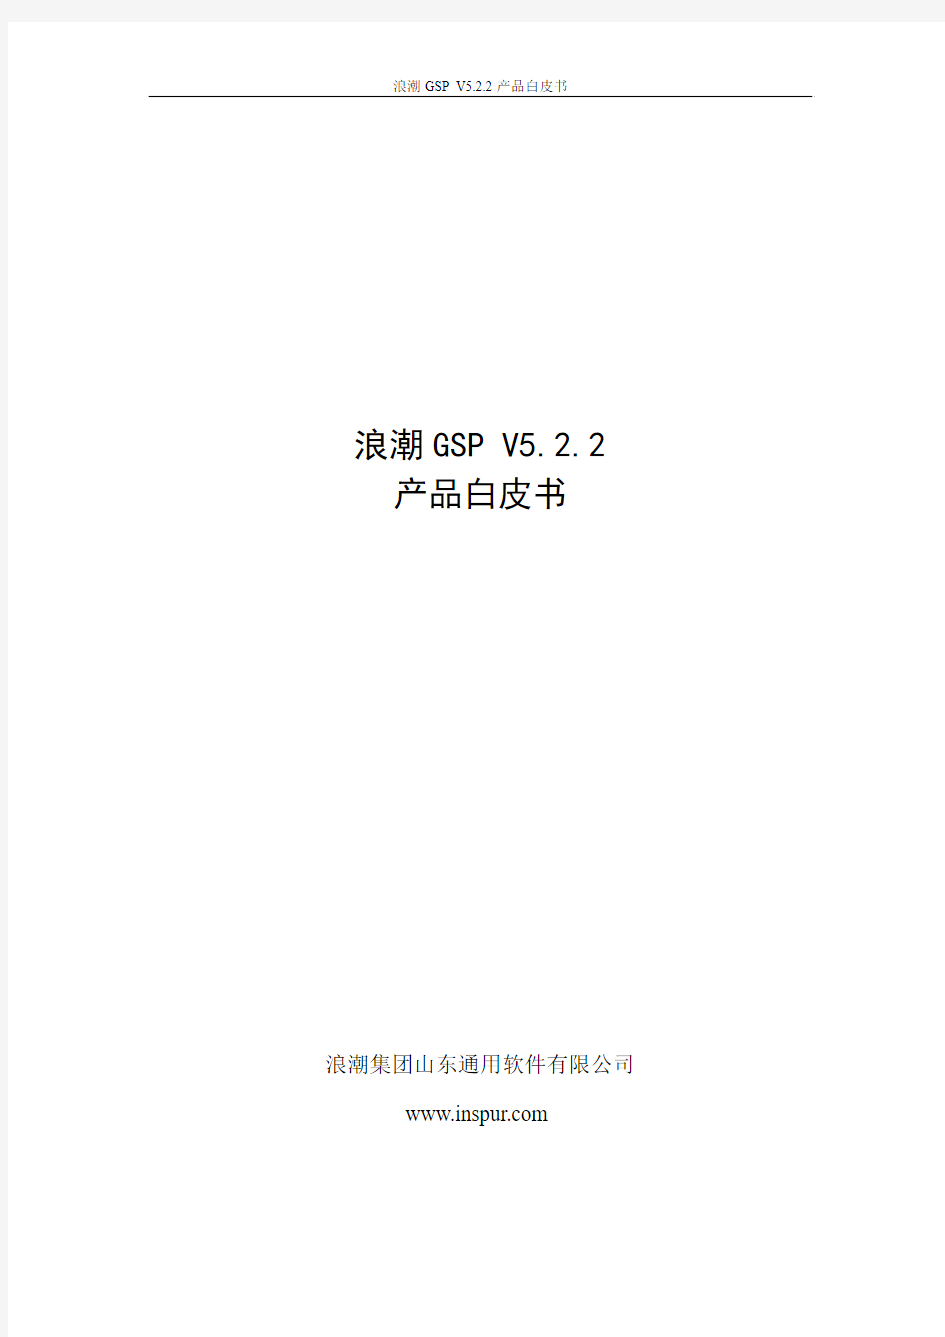 浪潮GSP V5.2.2产品白皮书